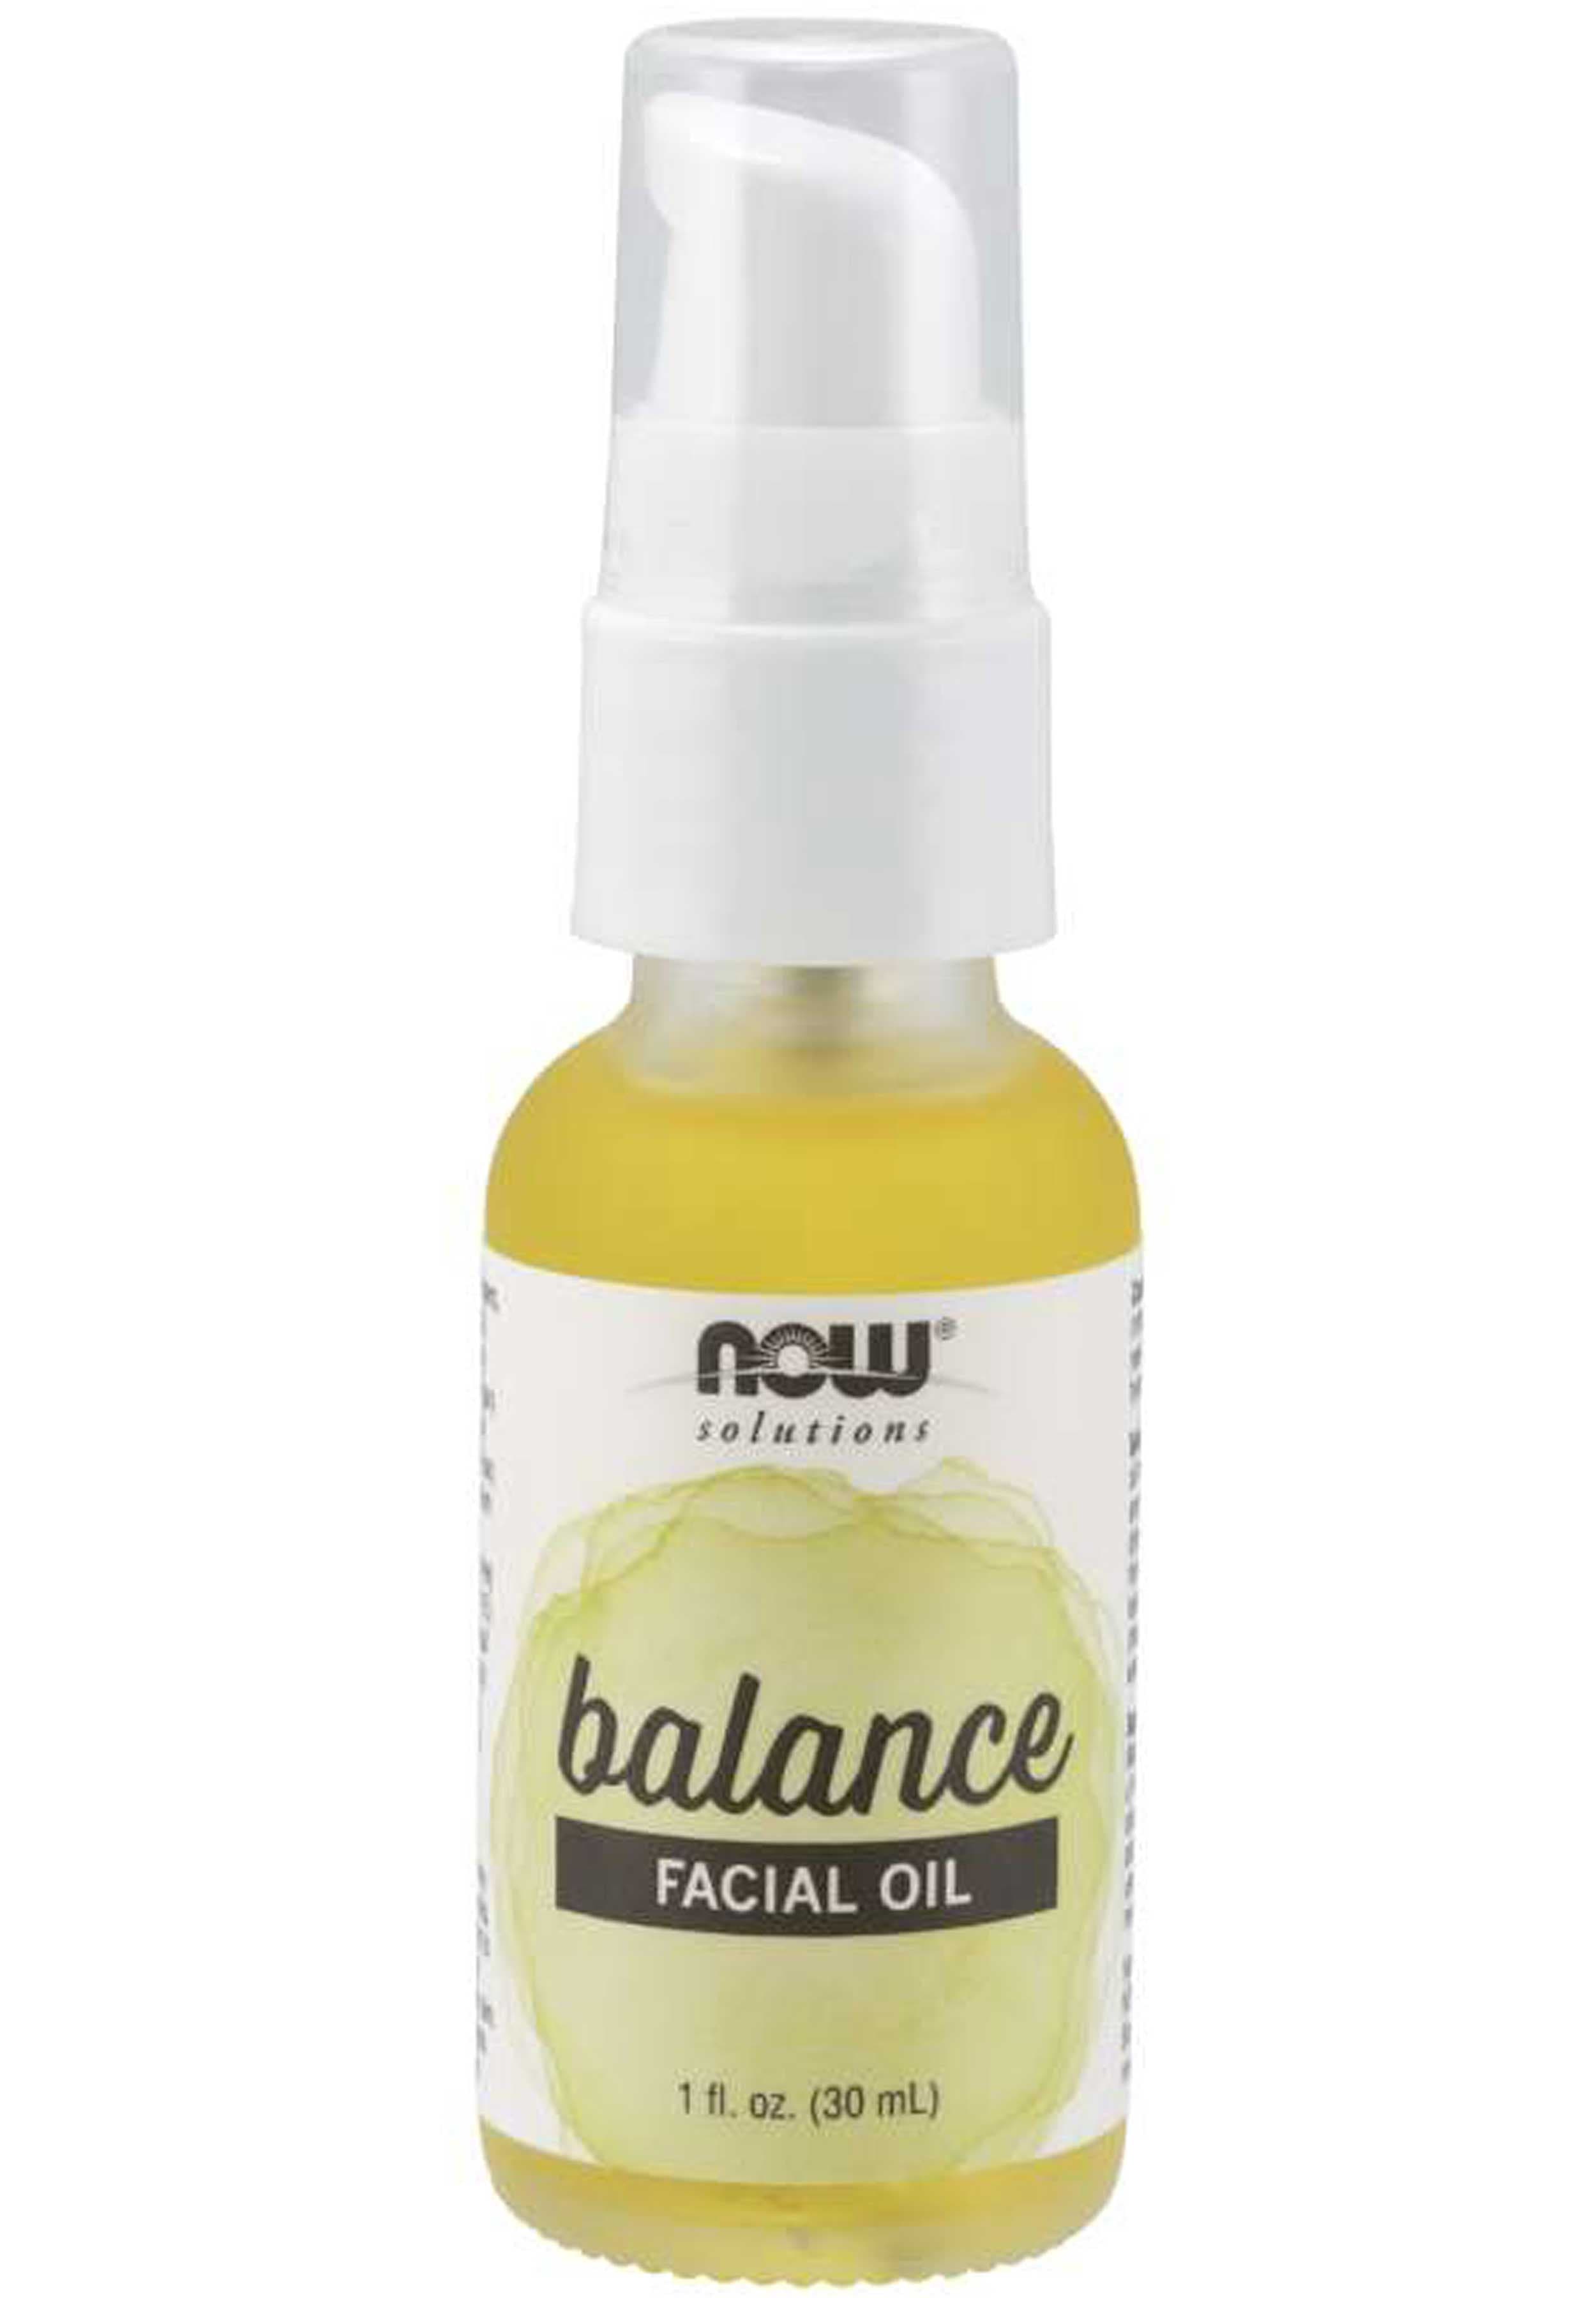 NOW Solutions Balance Facial Oil